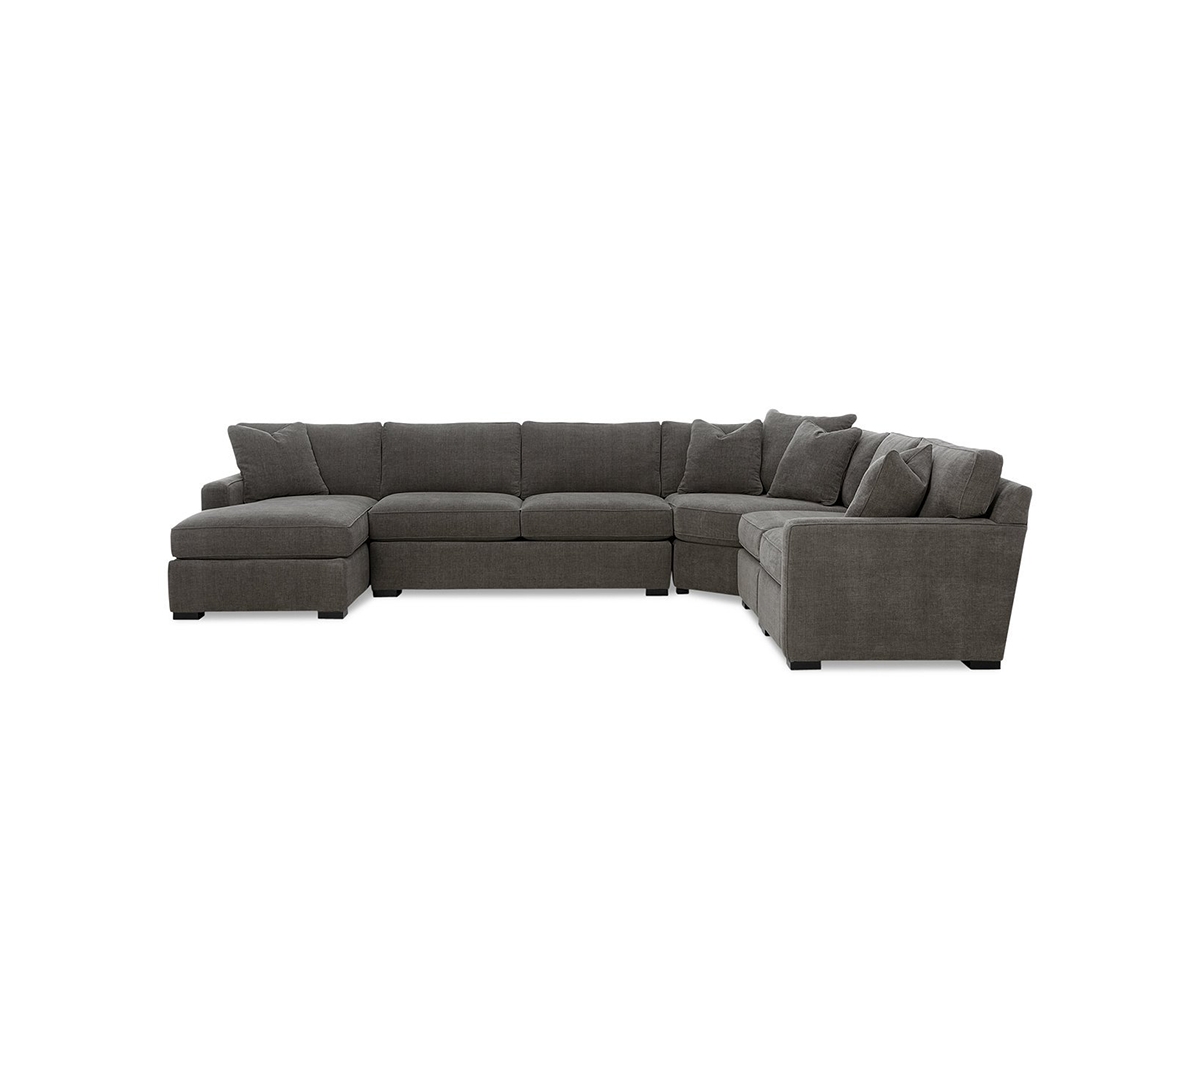 1101386 Radley 5-Piece Fabric Chaise Sectional Sofa, Creat sku 1101386